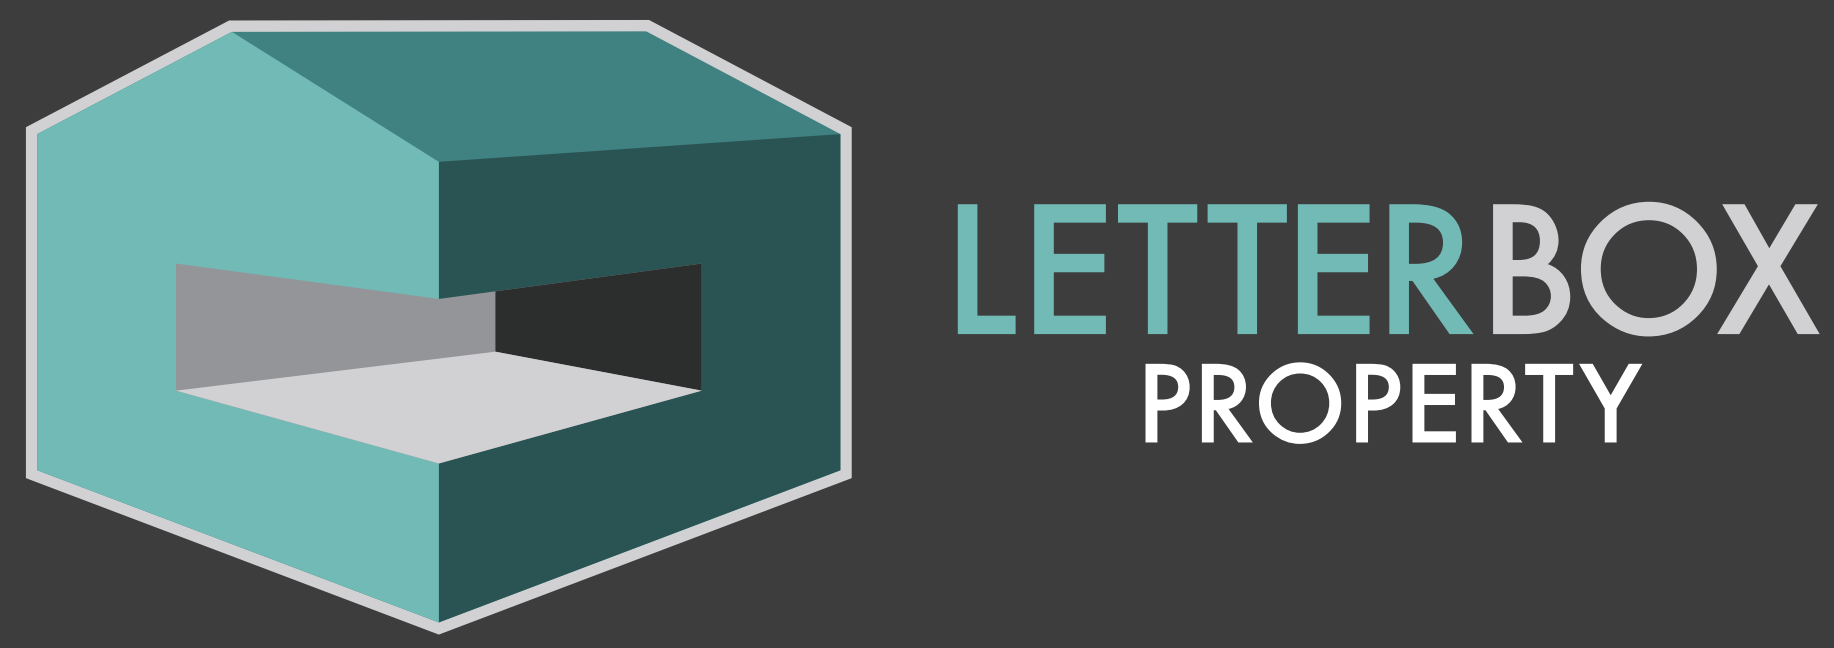 Letterbox_Logo.jpg